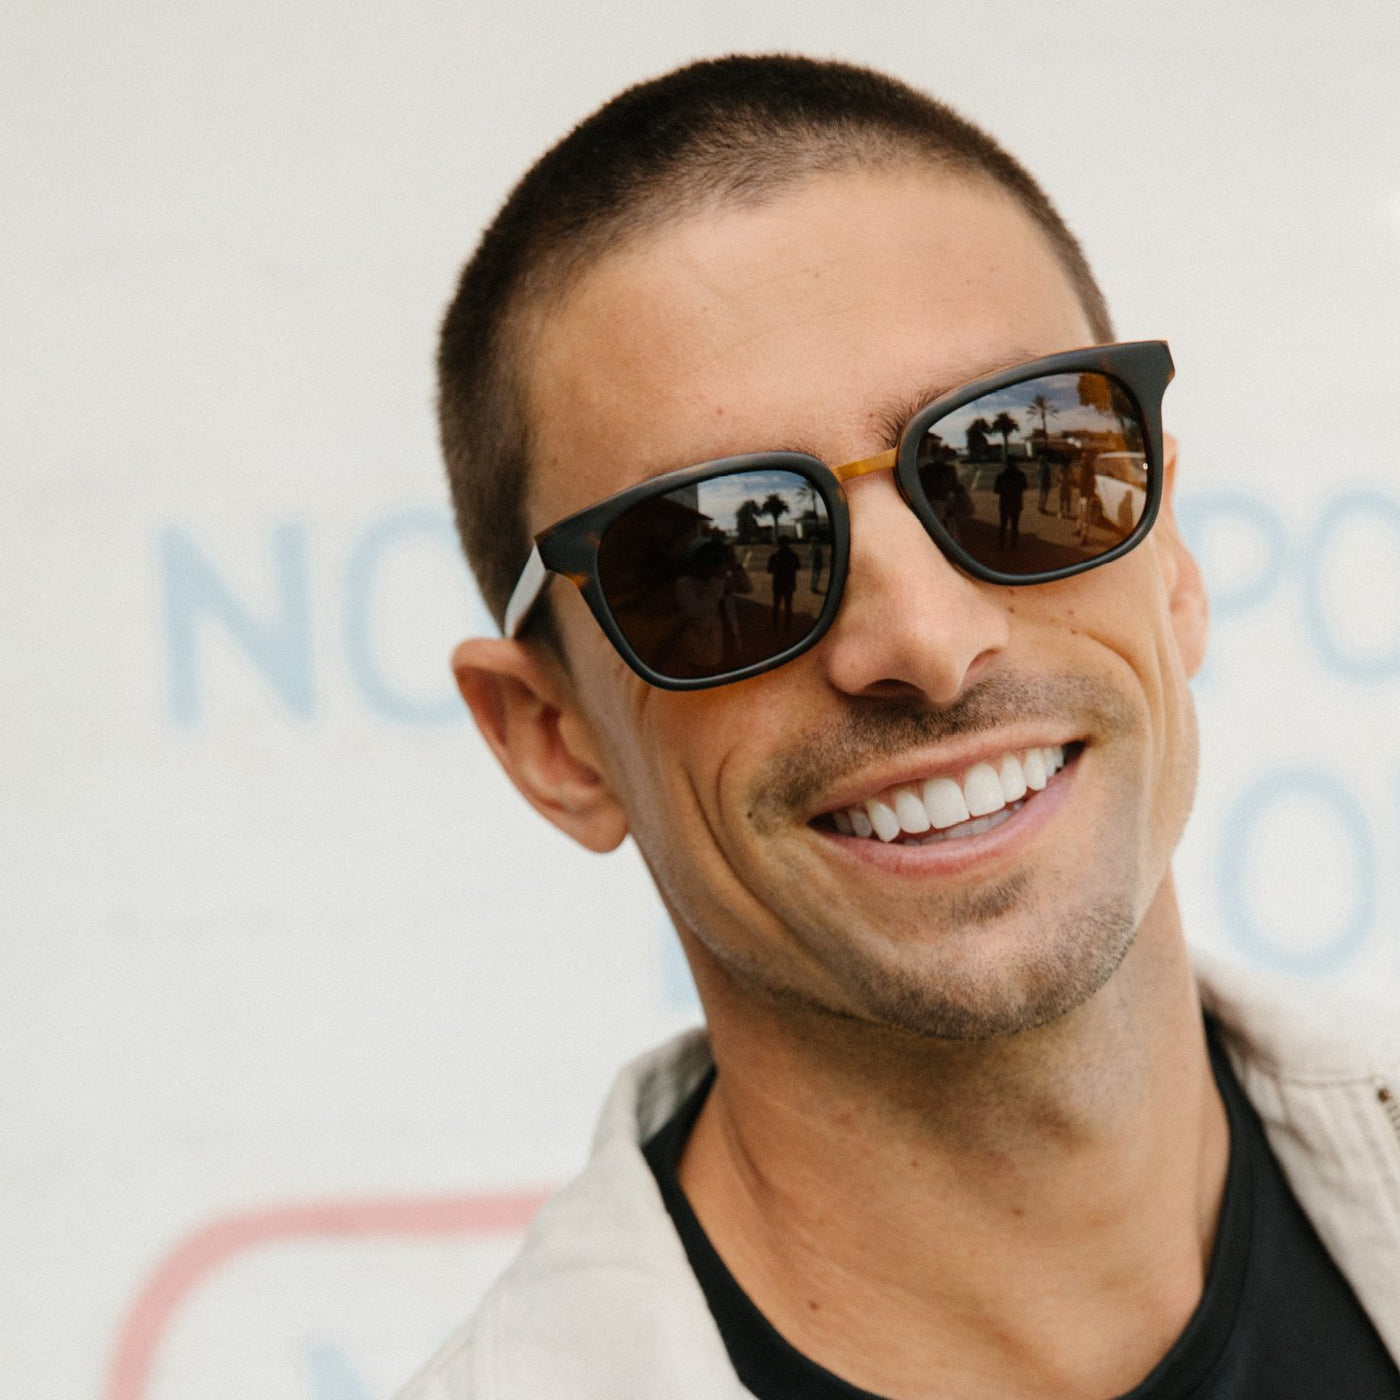 Man smiling wearing sunglasses